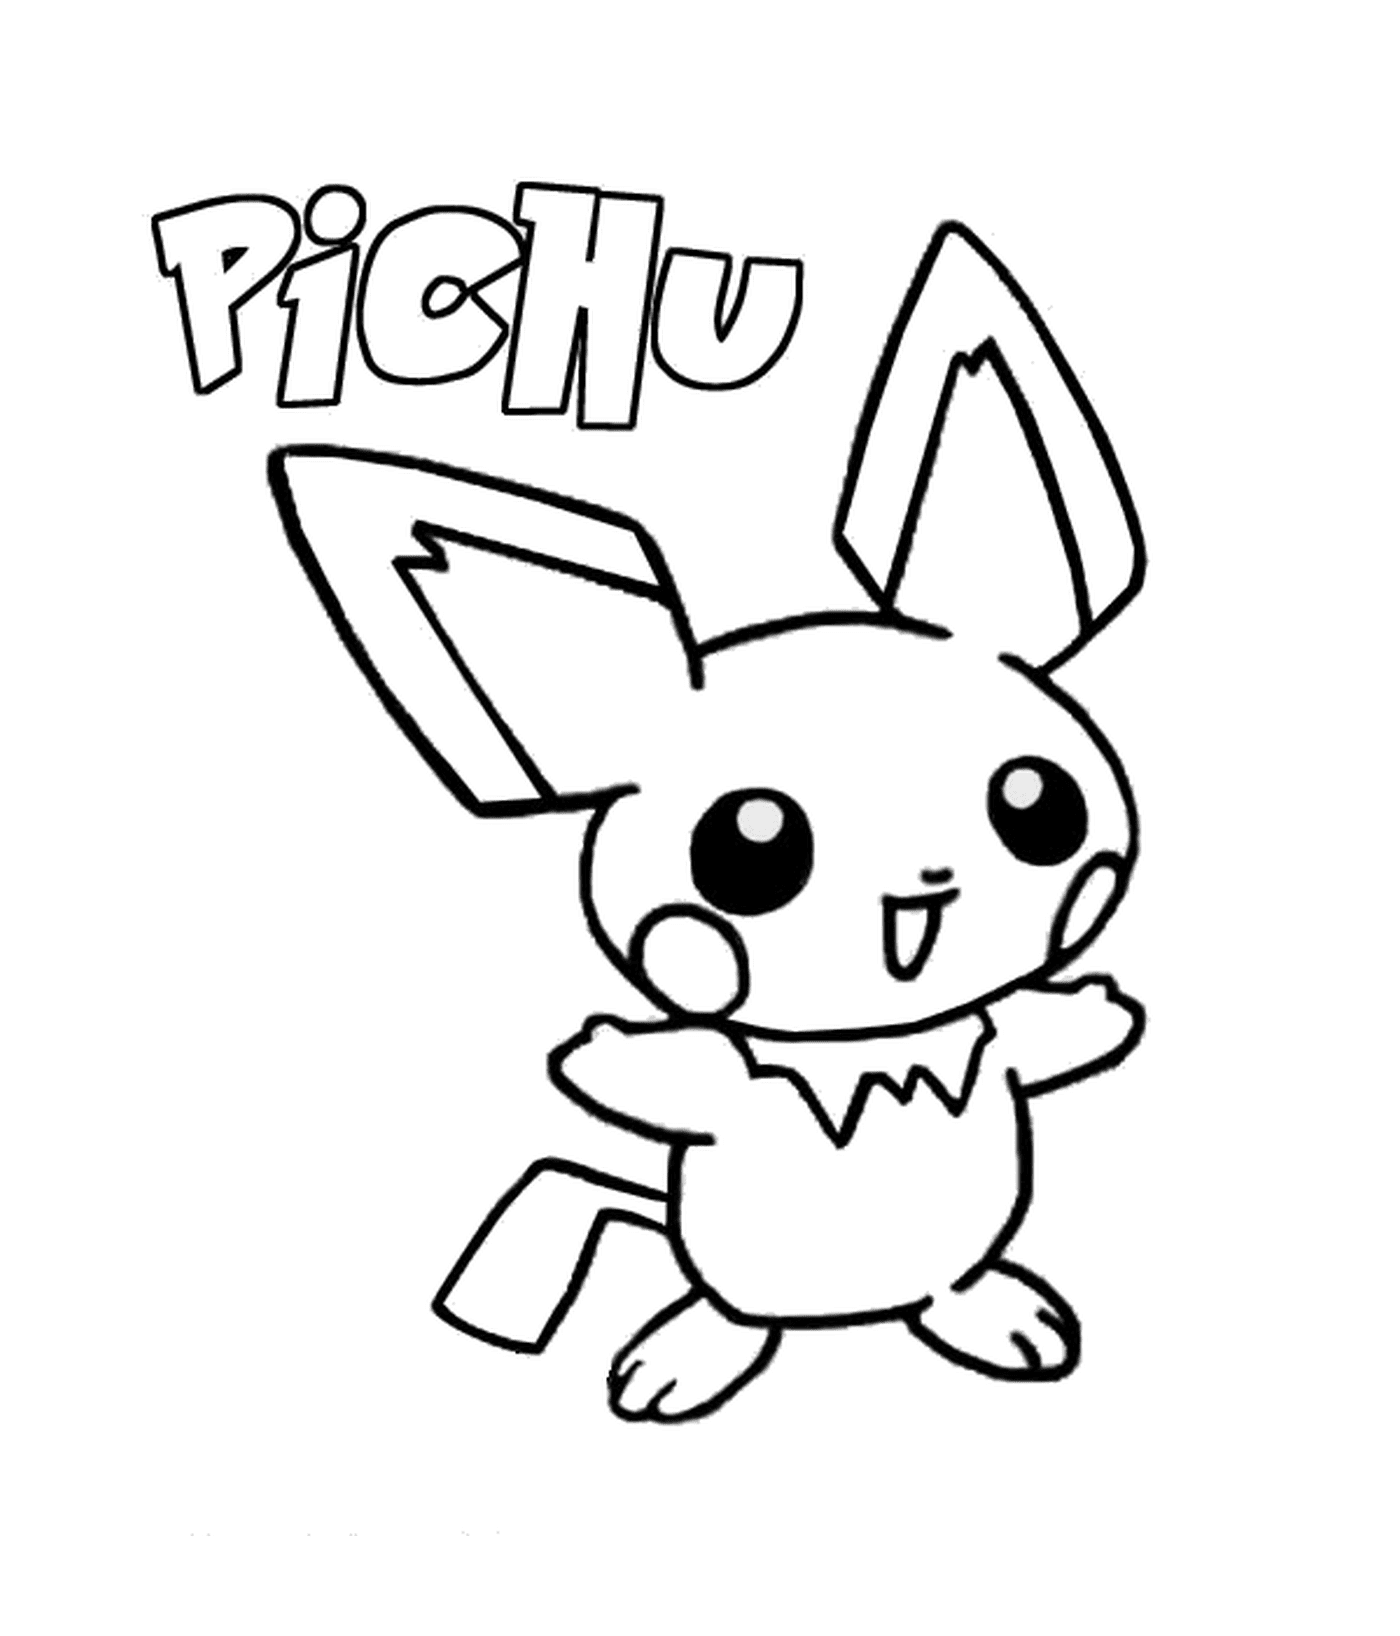  Pichu : Versión infantil de Pikachu 